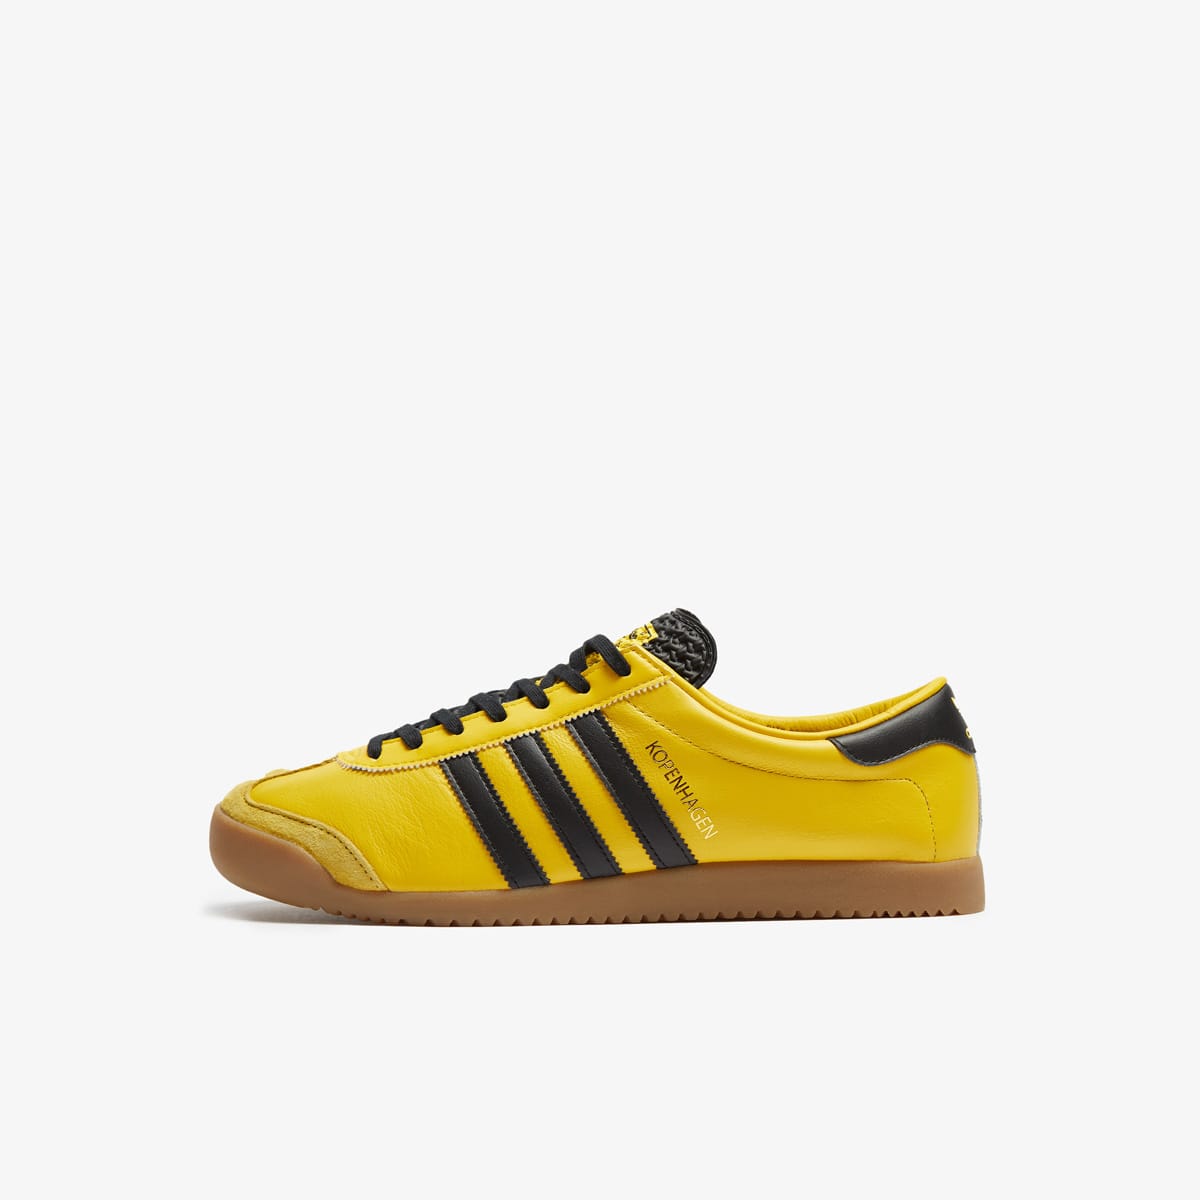 Adidas Kopenhagen (Yellow, Black & Gold) | END. Launches